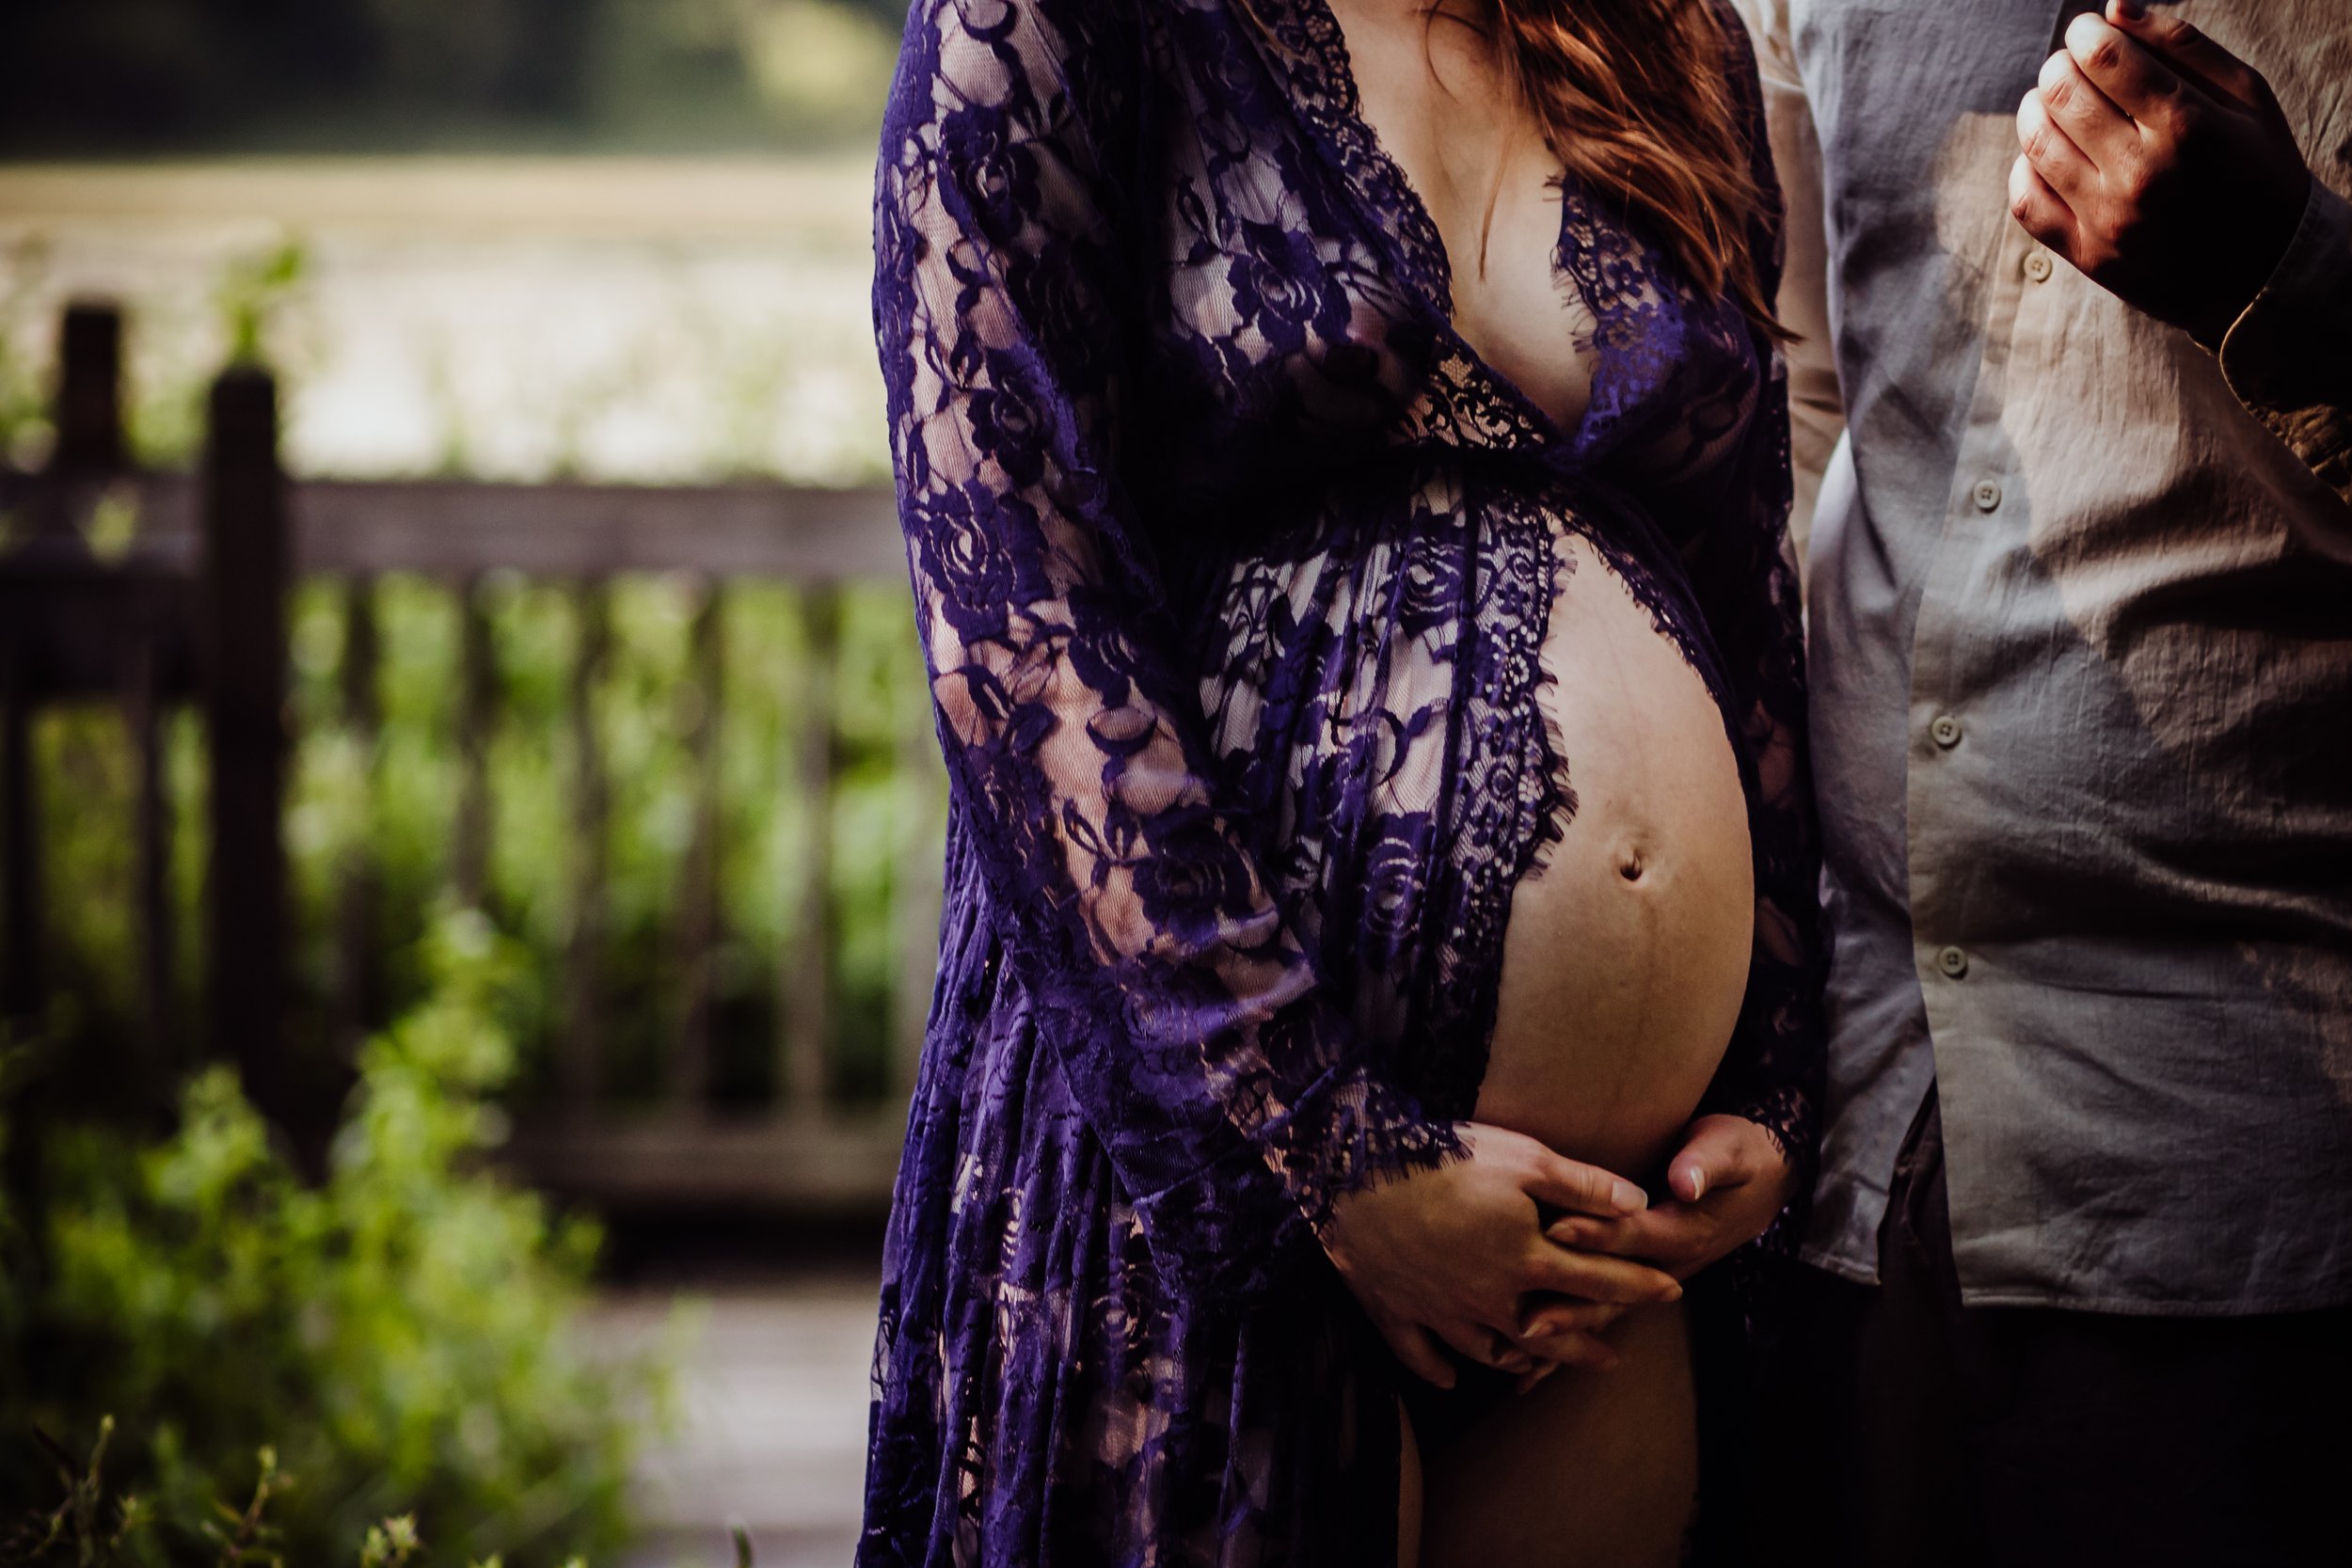 Chelsea-Michigan-Maternity-Photographer (27).jpg